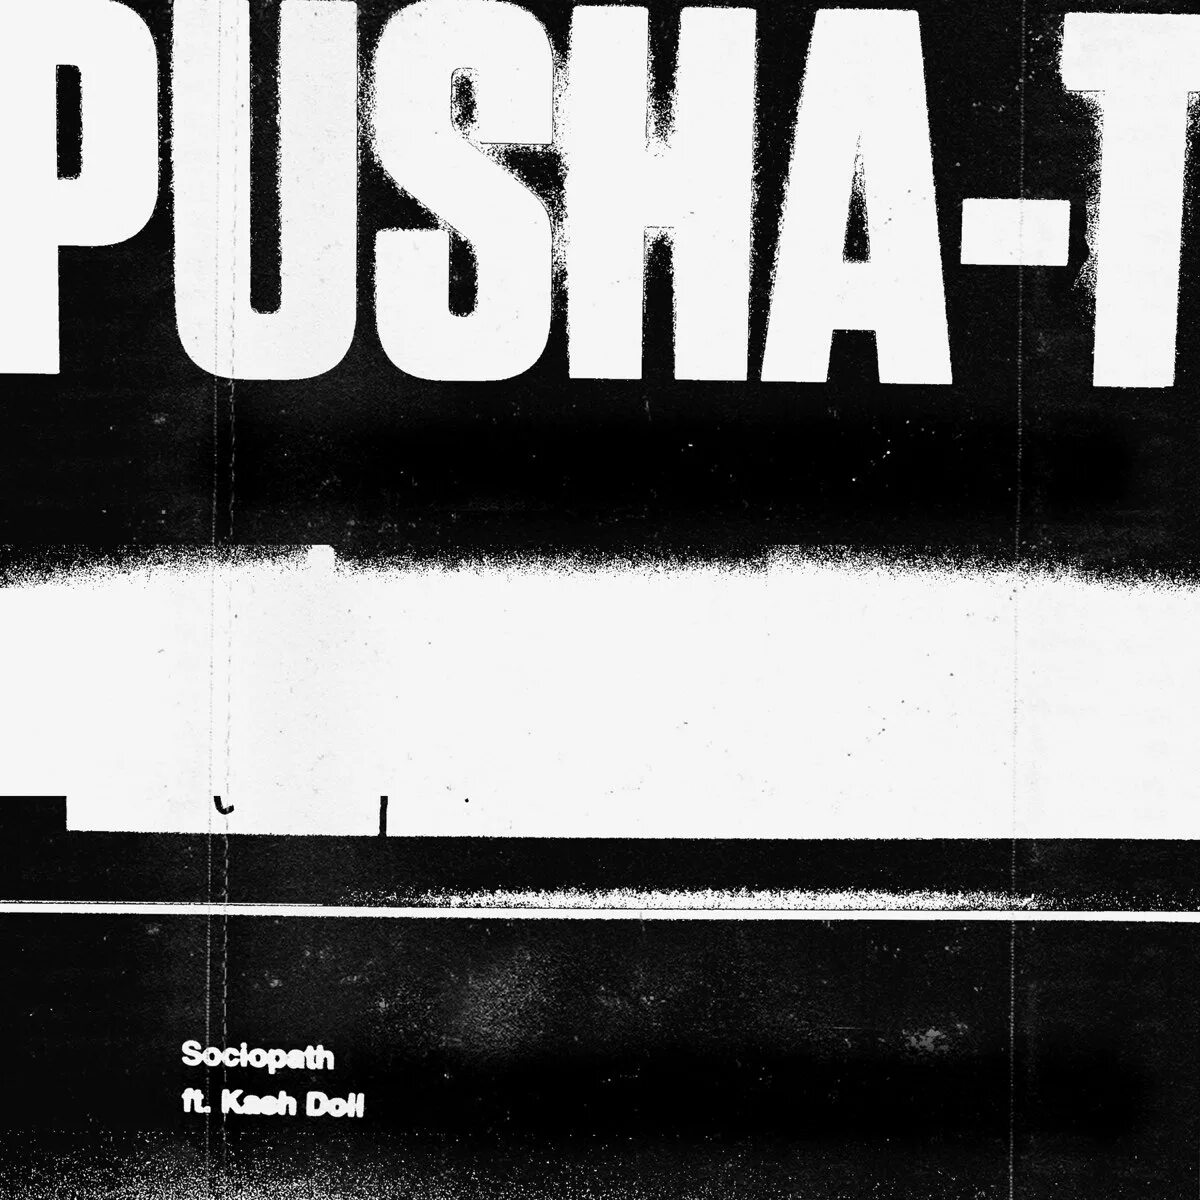 Pusha t. Pusha t & Kash Doll - sociopath. Pusha t Diet Coke обложка. Pusha t альбом. Pusha t feat